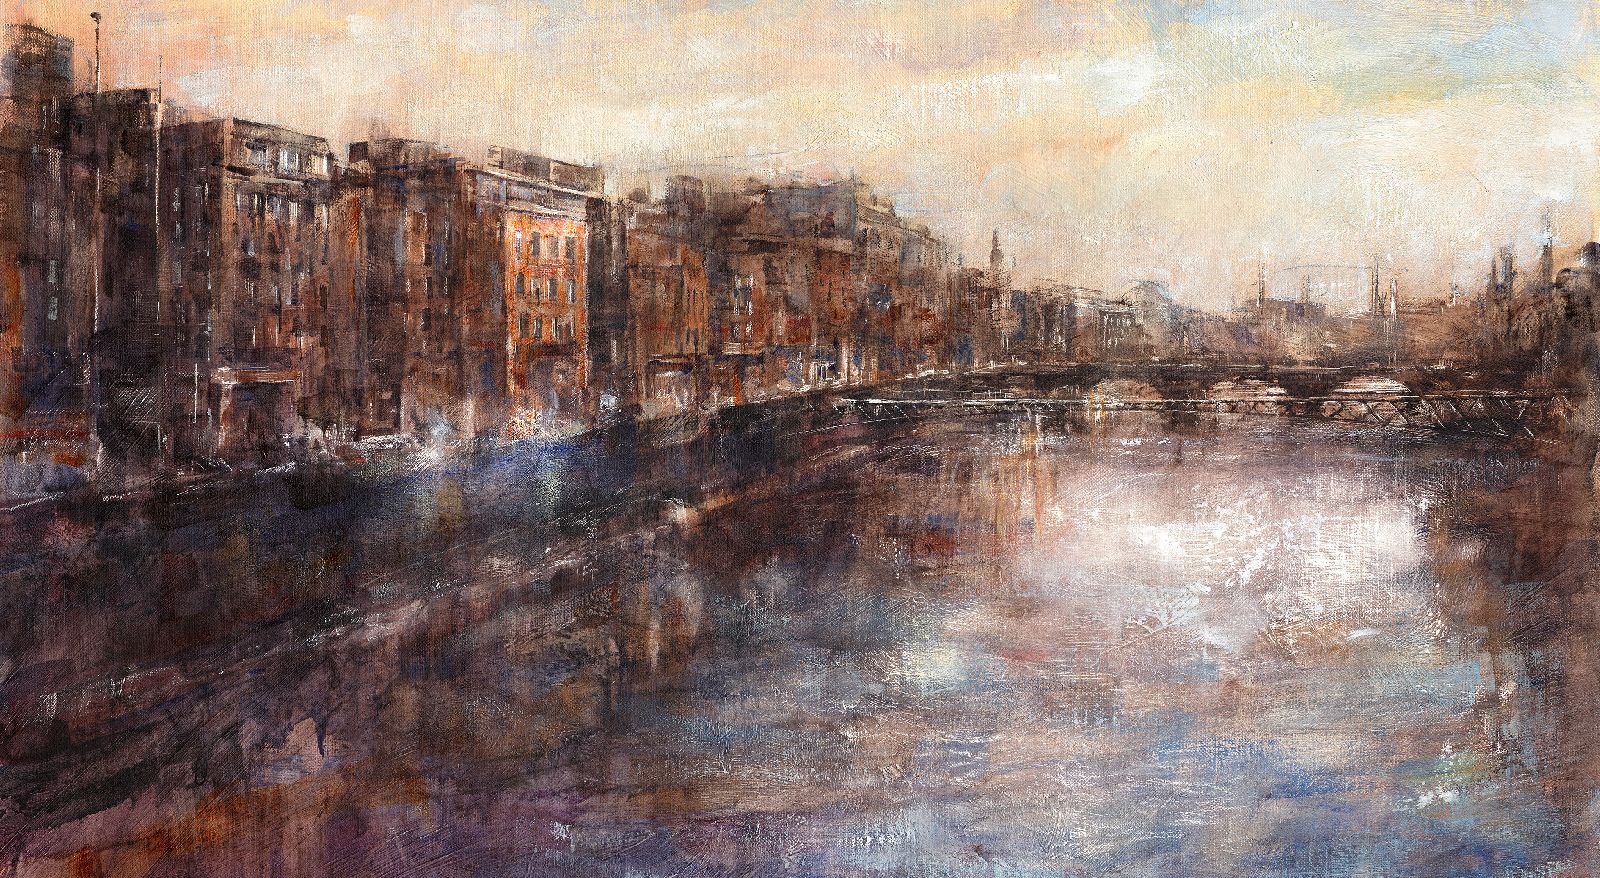 Dublin Quay 1 by Gary Benfield